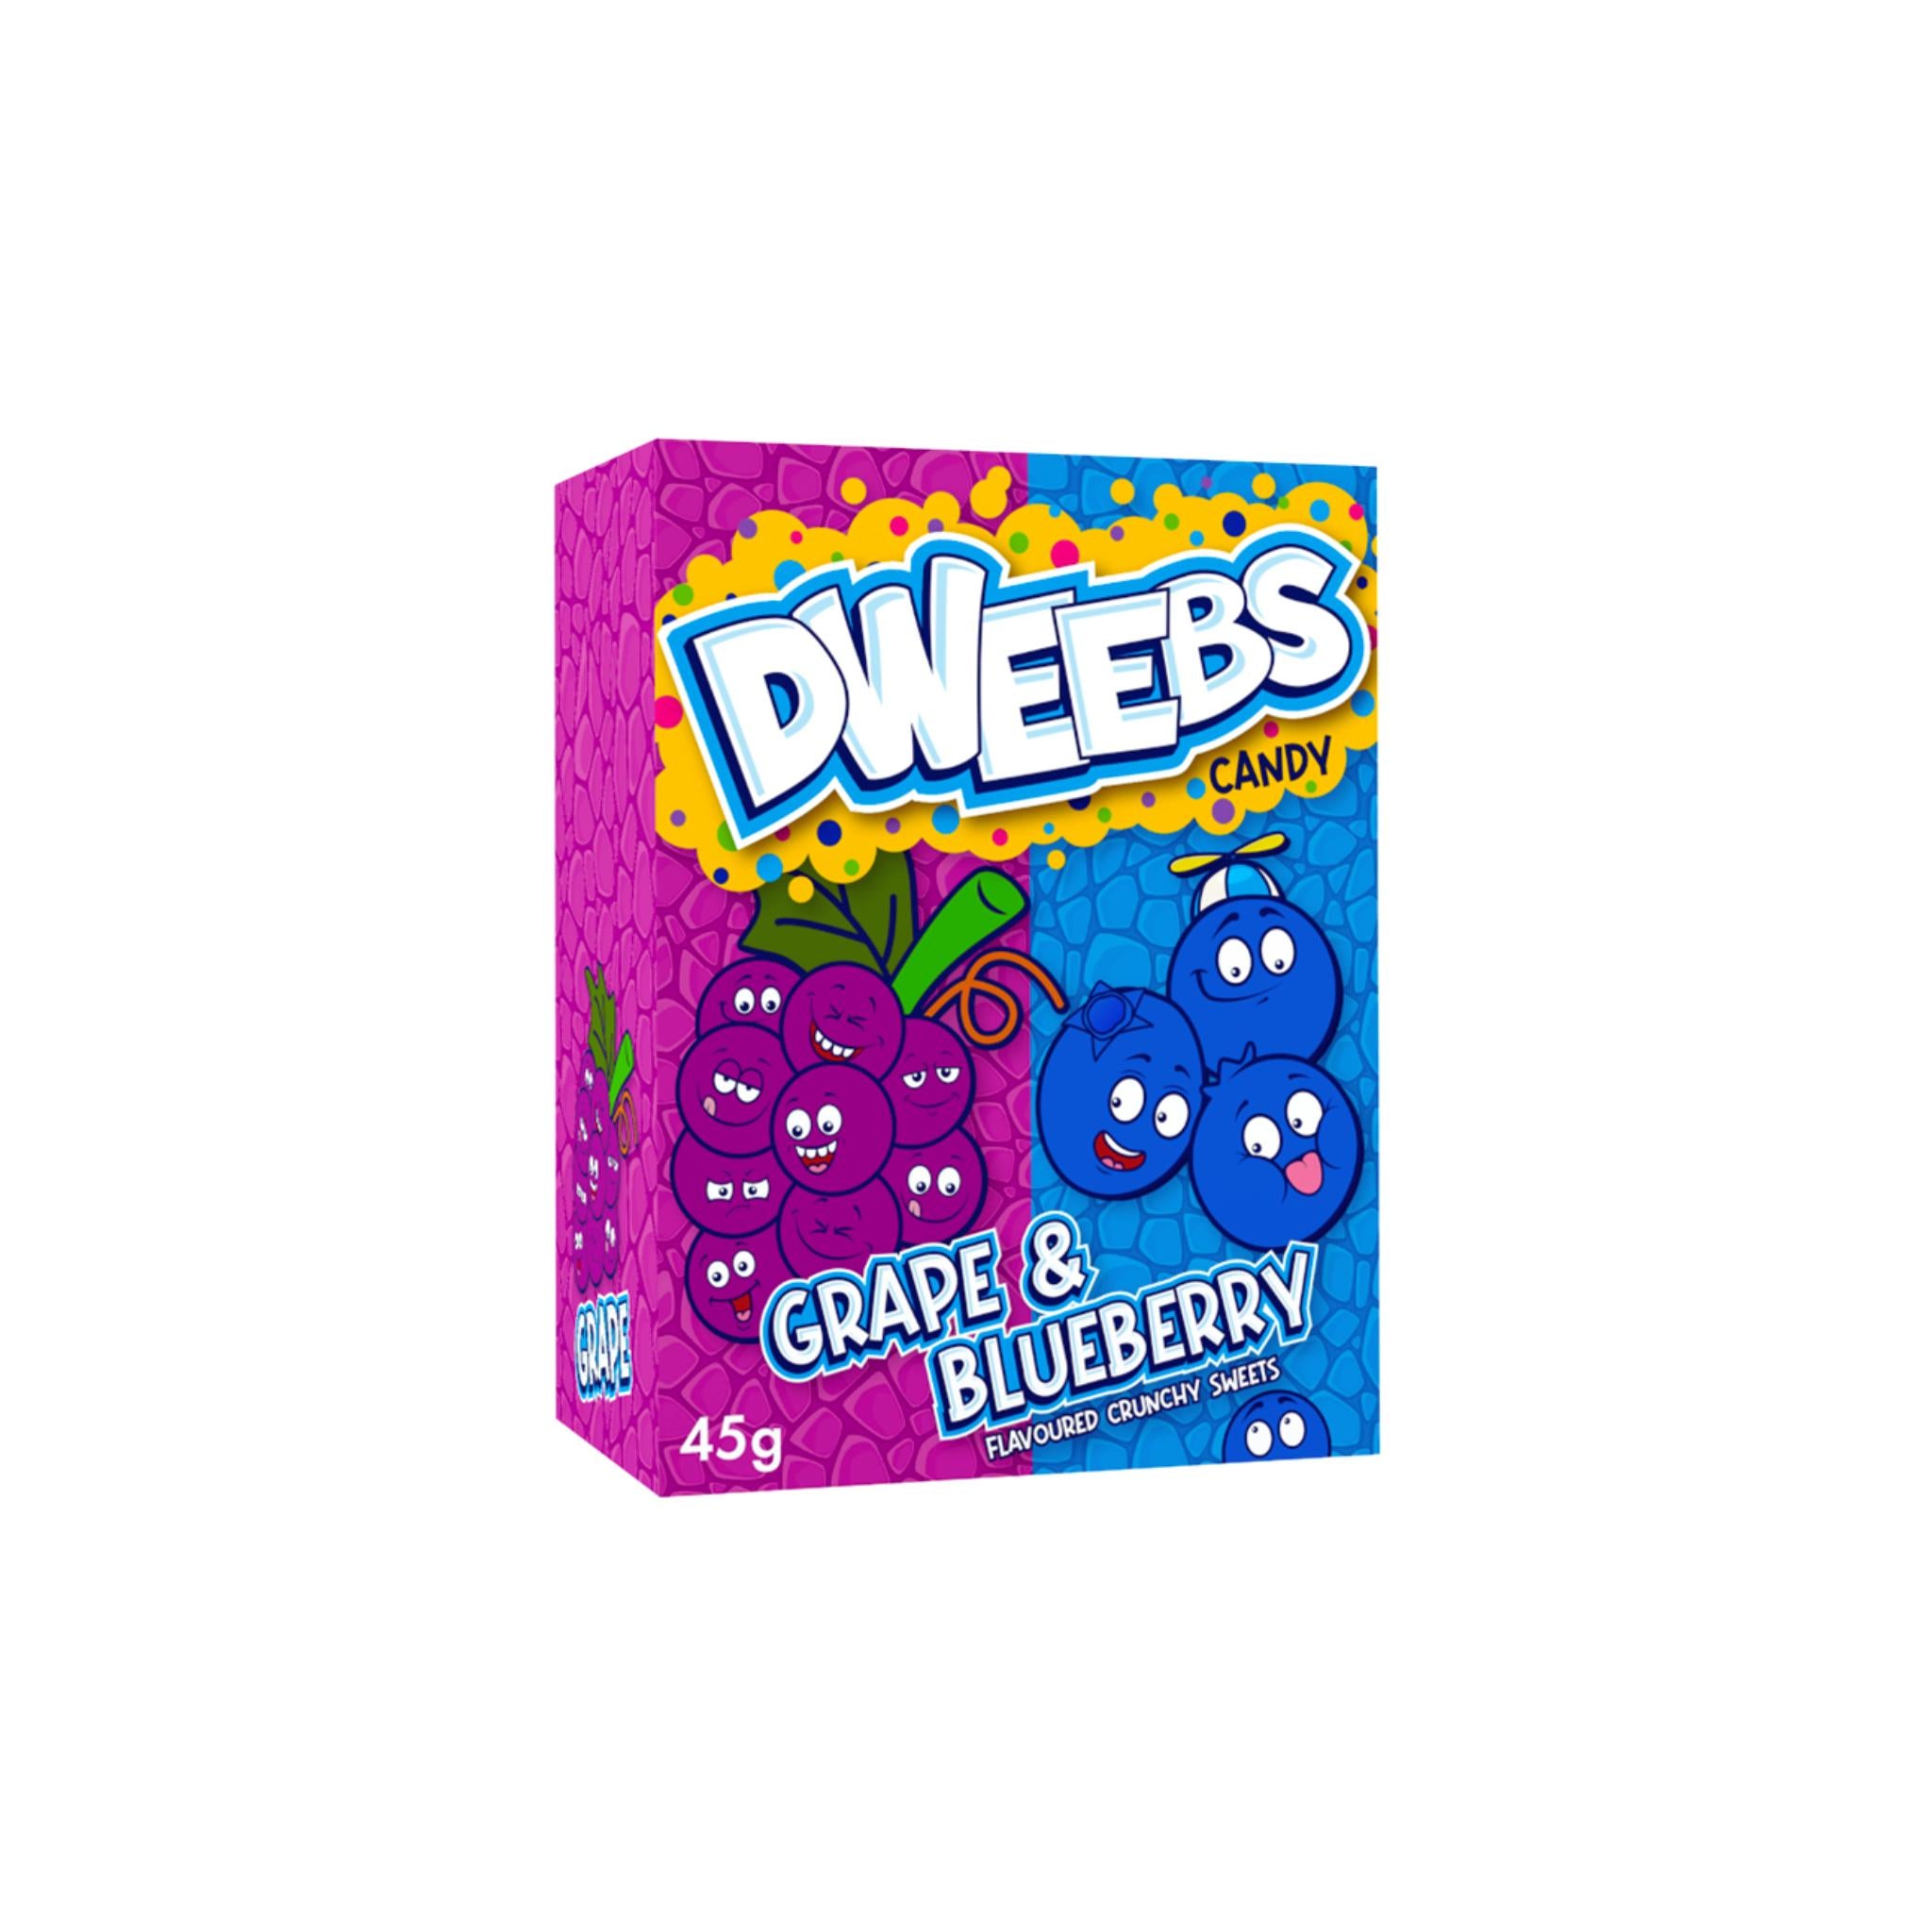 Dweebs Grape & Blueberry - 45g